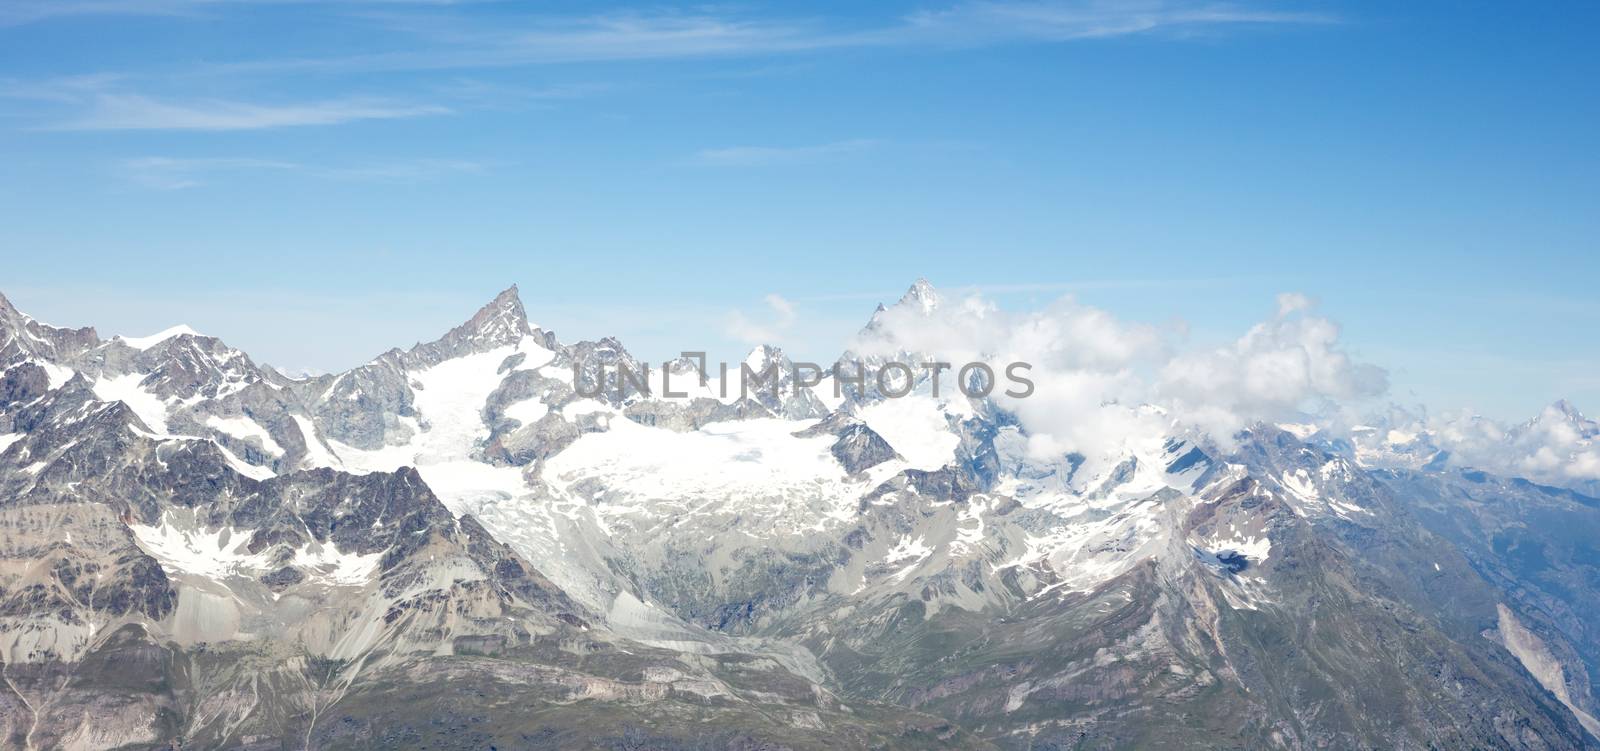 Amazing panorama from matterhorn glacier paradise by michaklootwijk